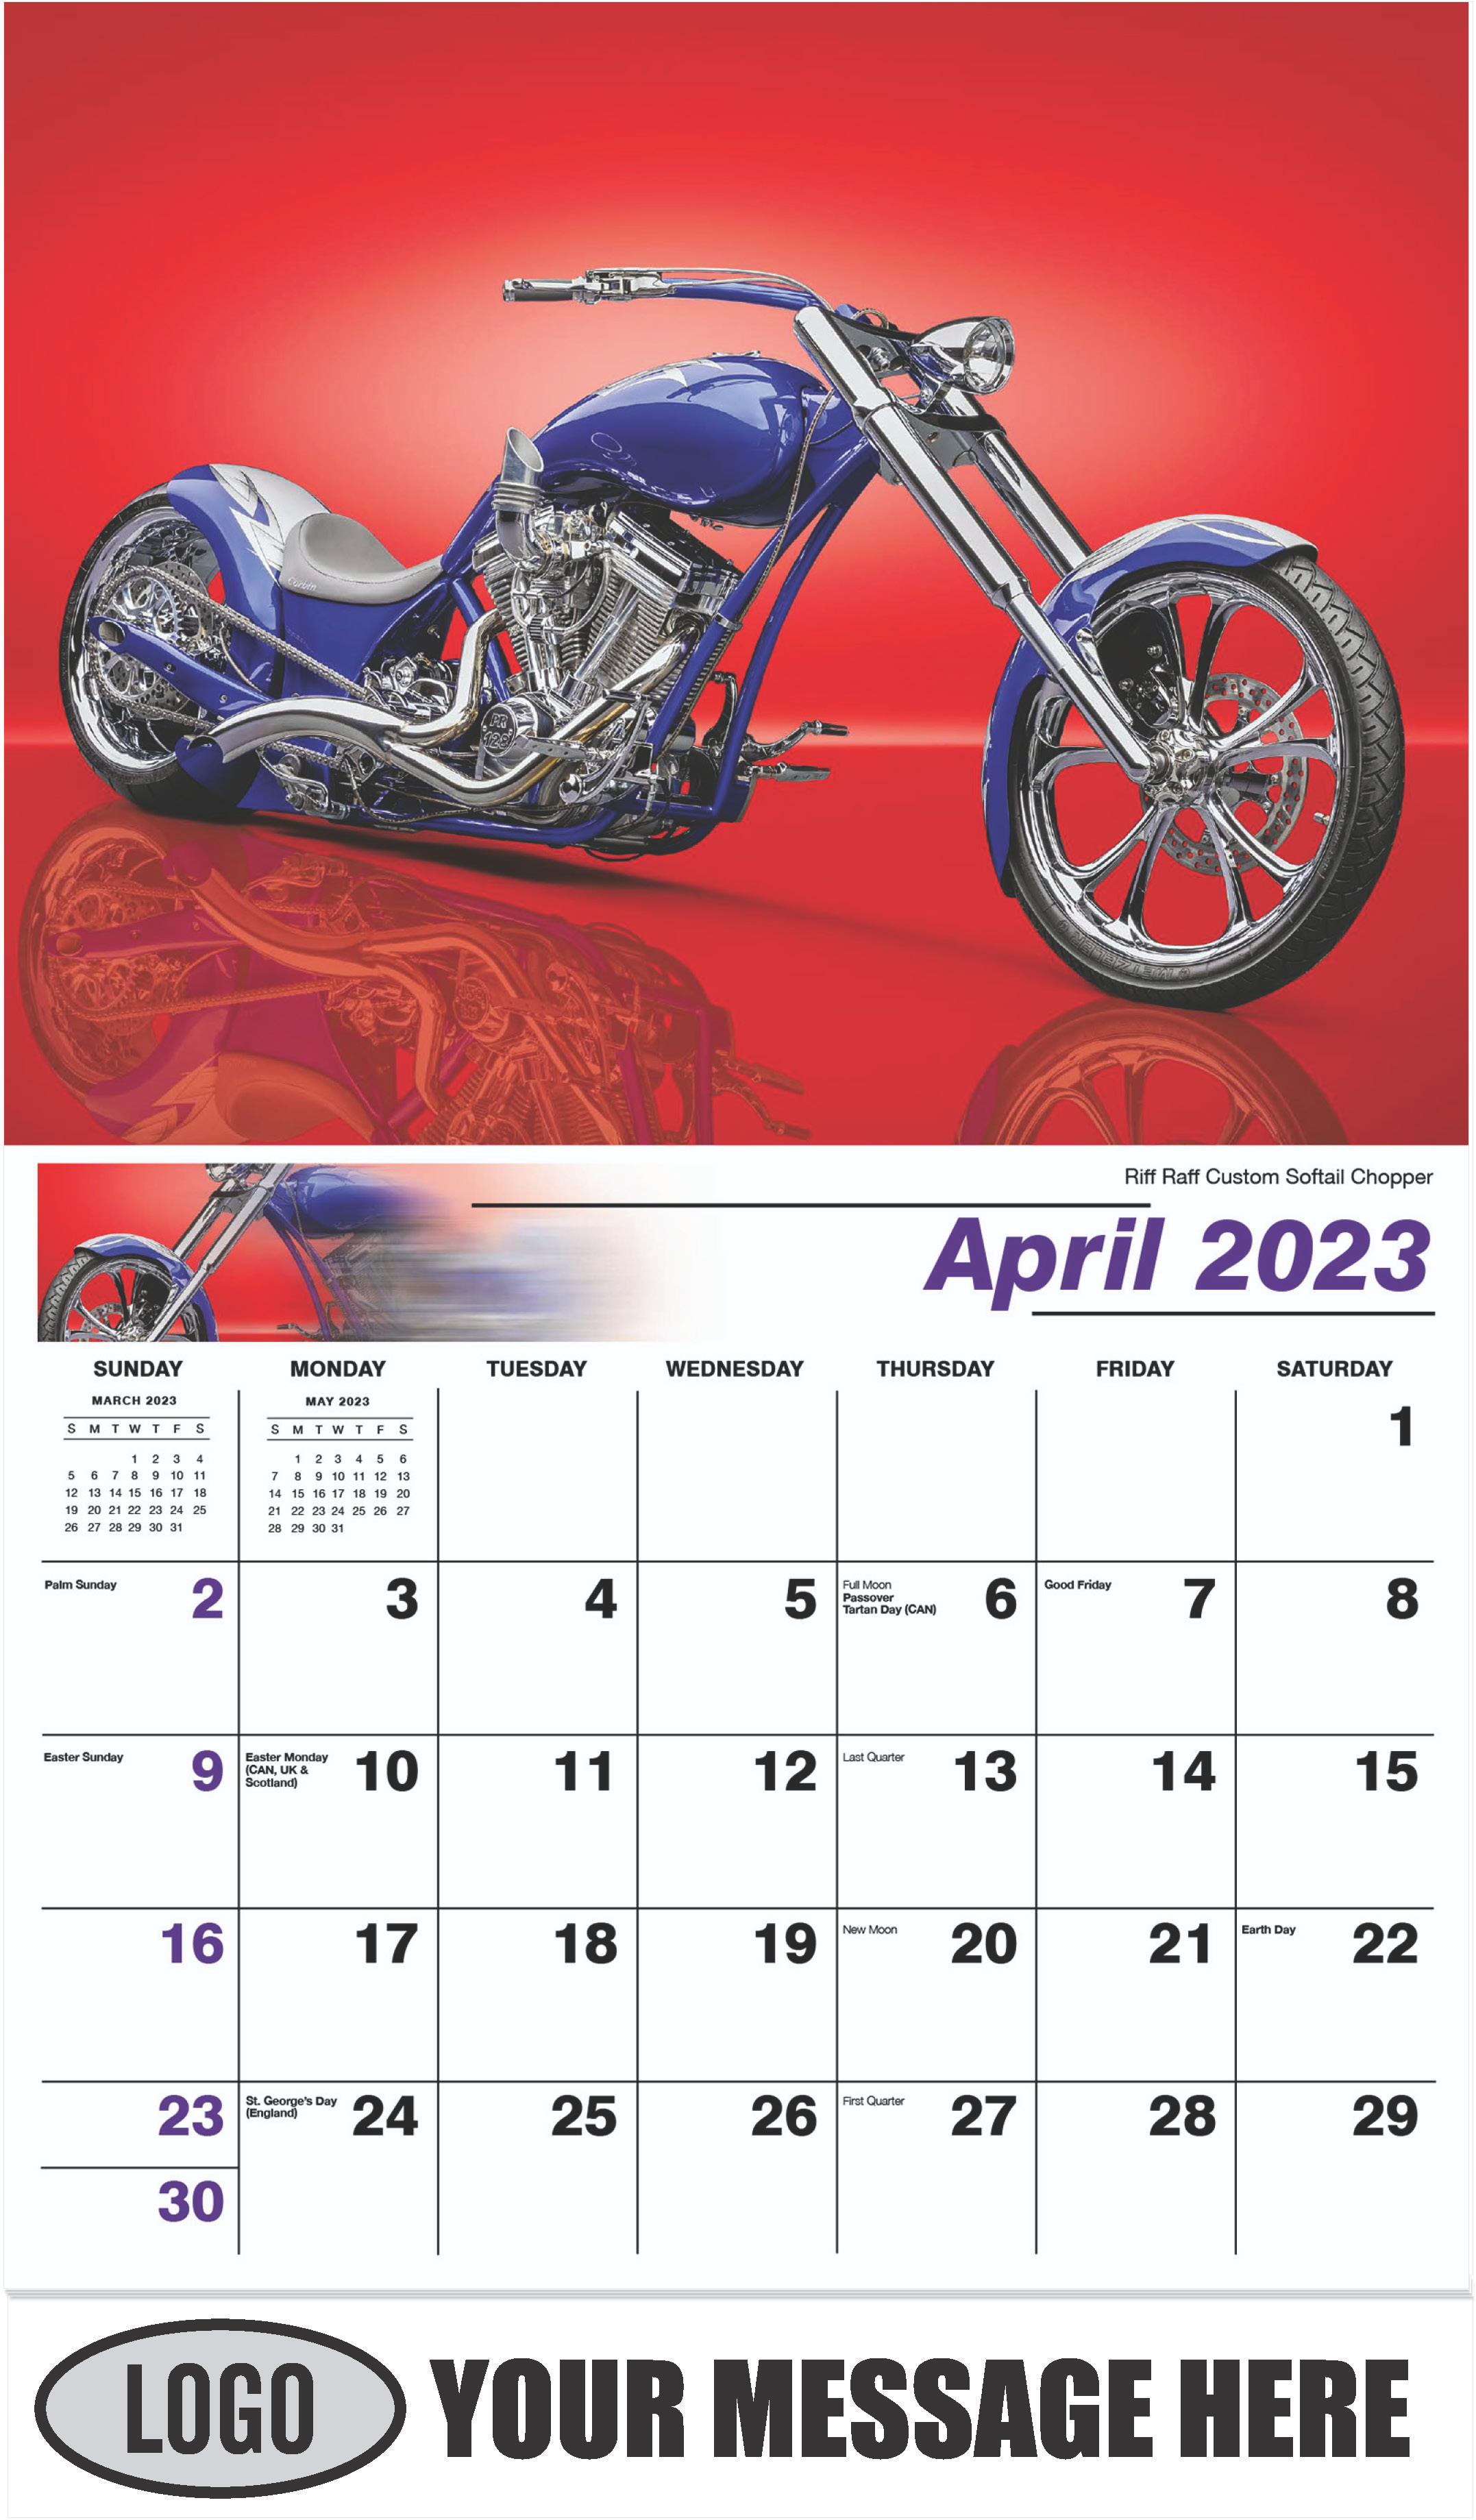 Riff Raff Custom Softail Chopper - April - Motorcycle Mania 2023 Promotional Calendar